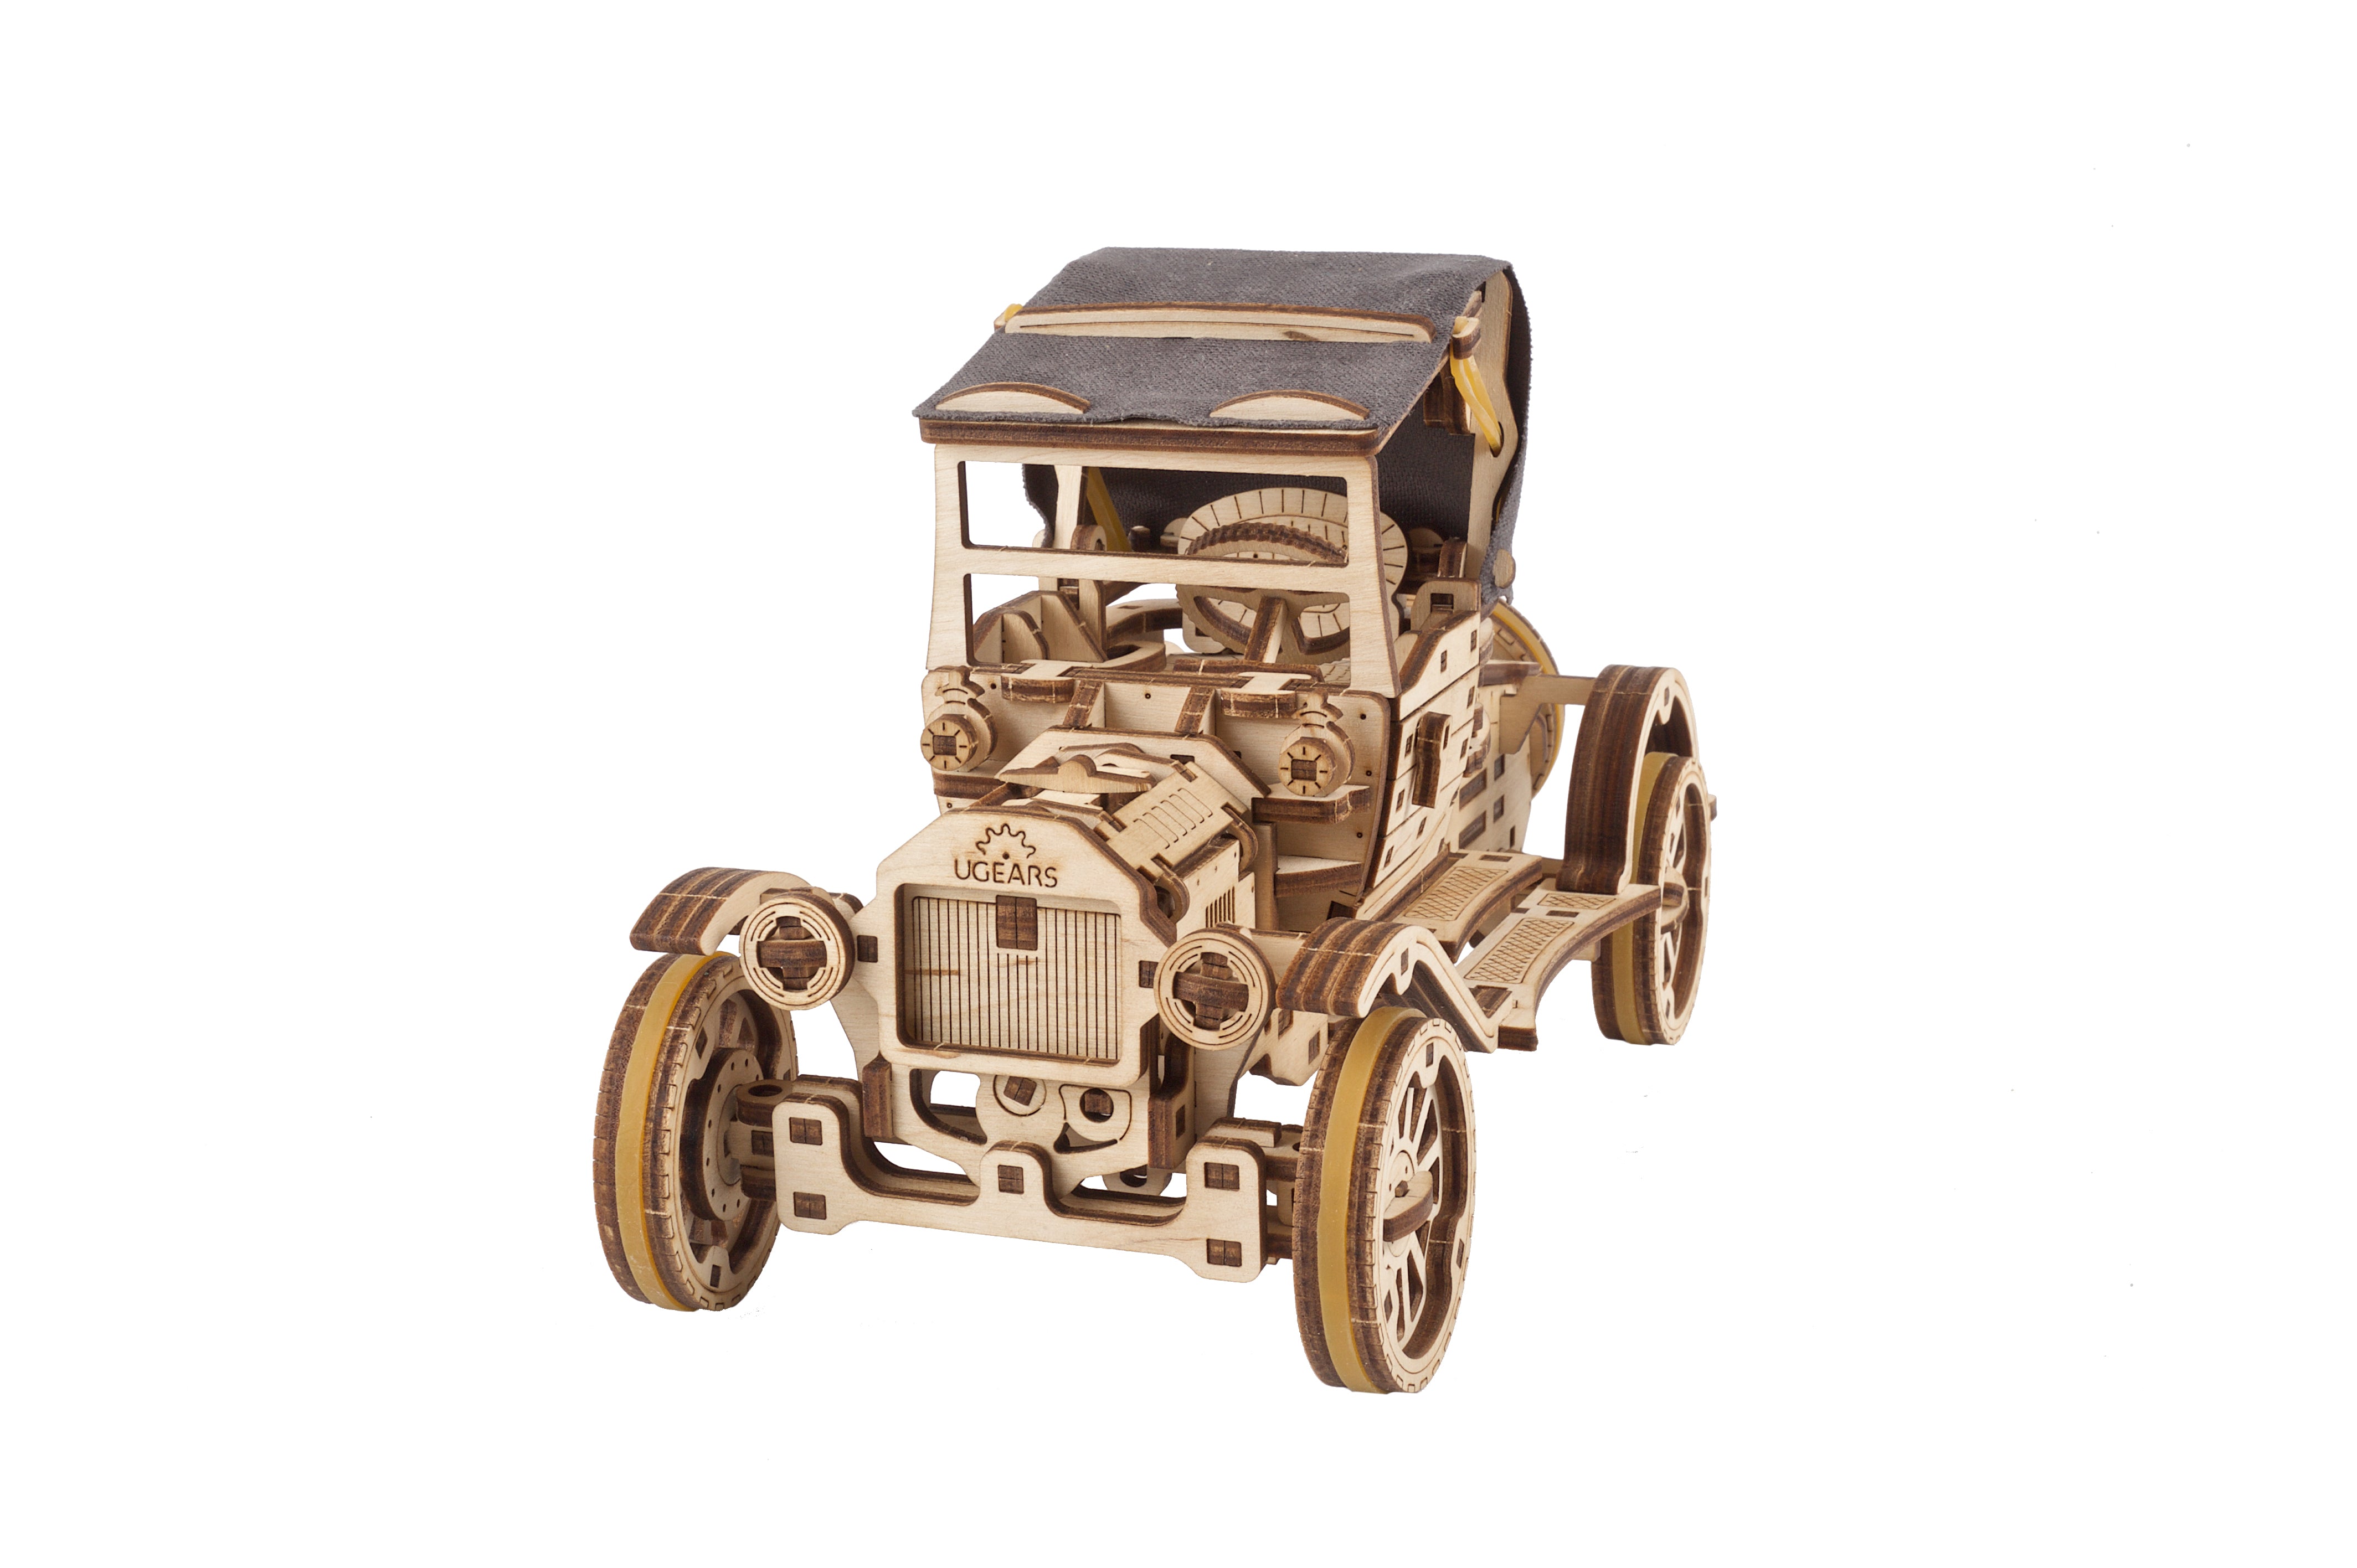 Oldtimer - Model T Retro Car